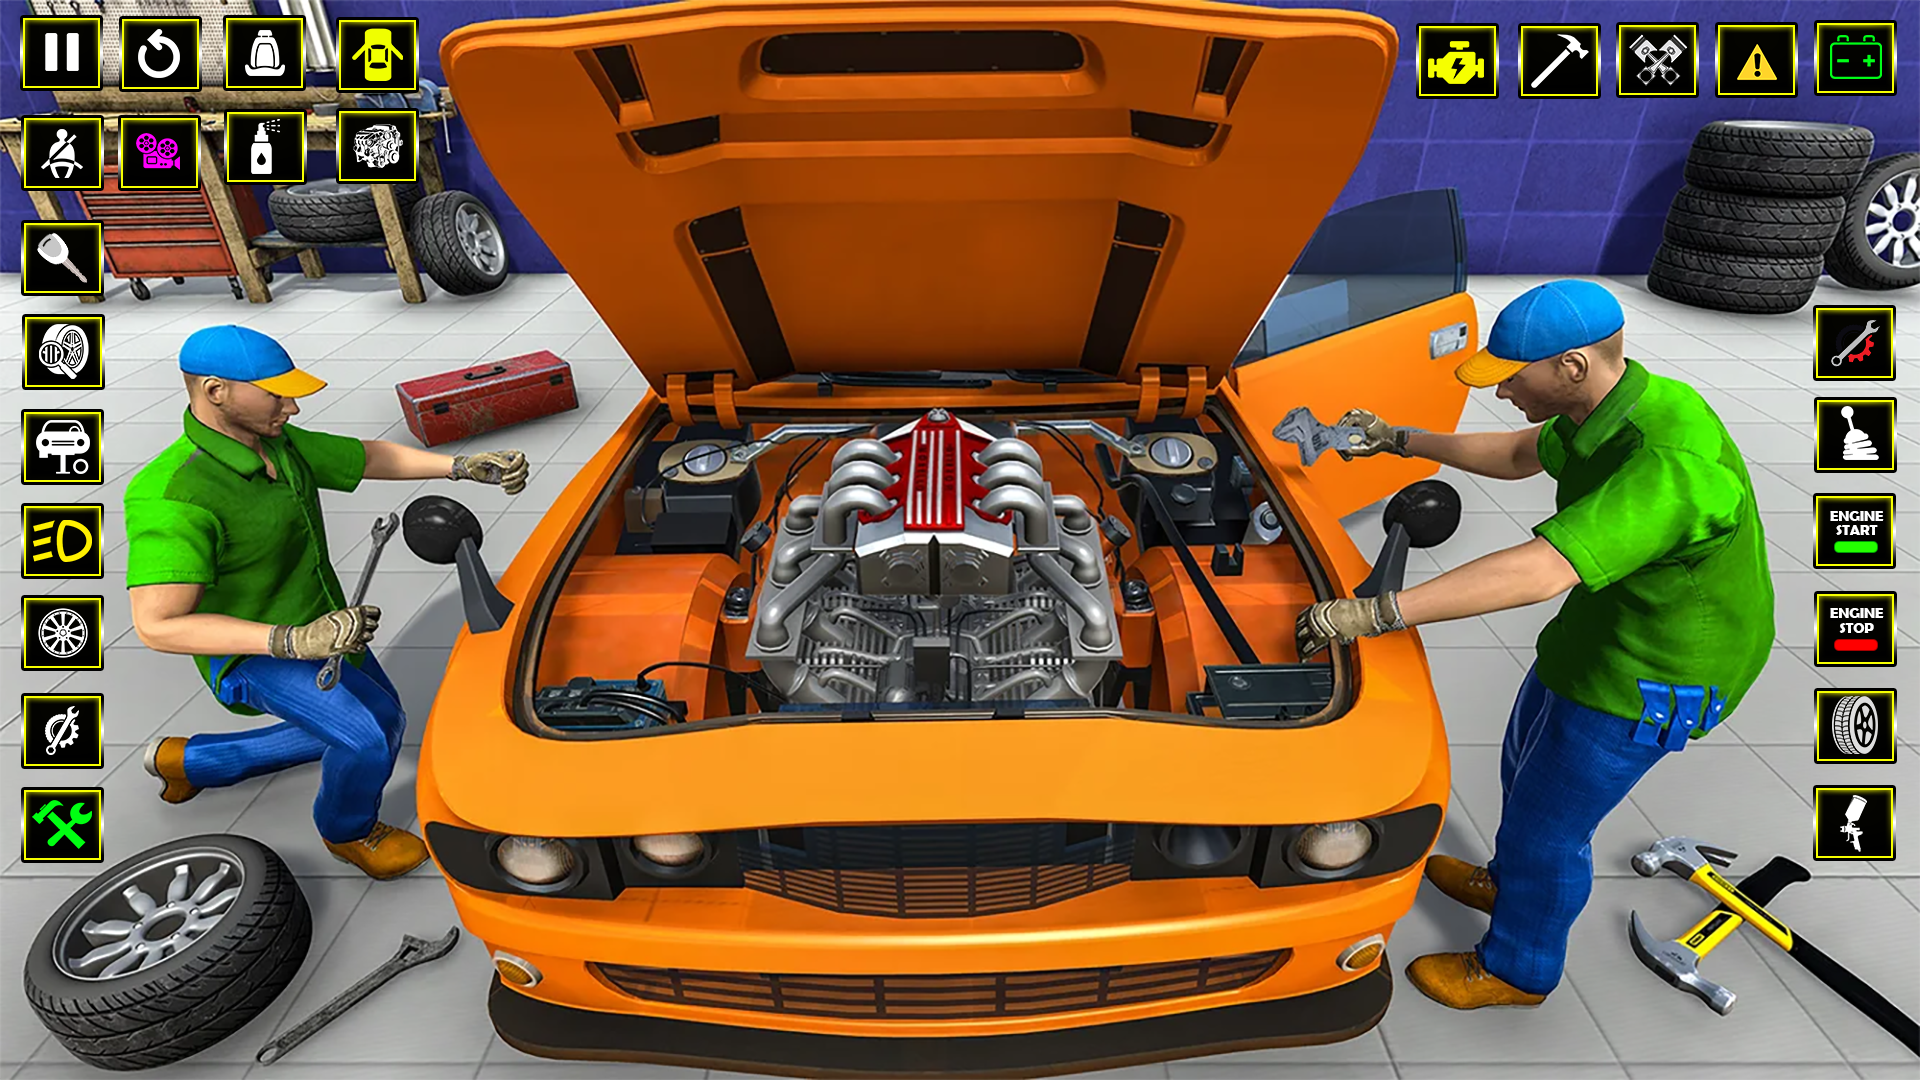 Screenshot 1 of Meccanico auto simulatore 3D 1.0.20